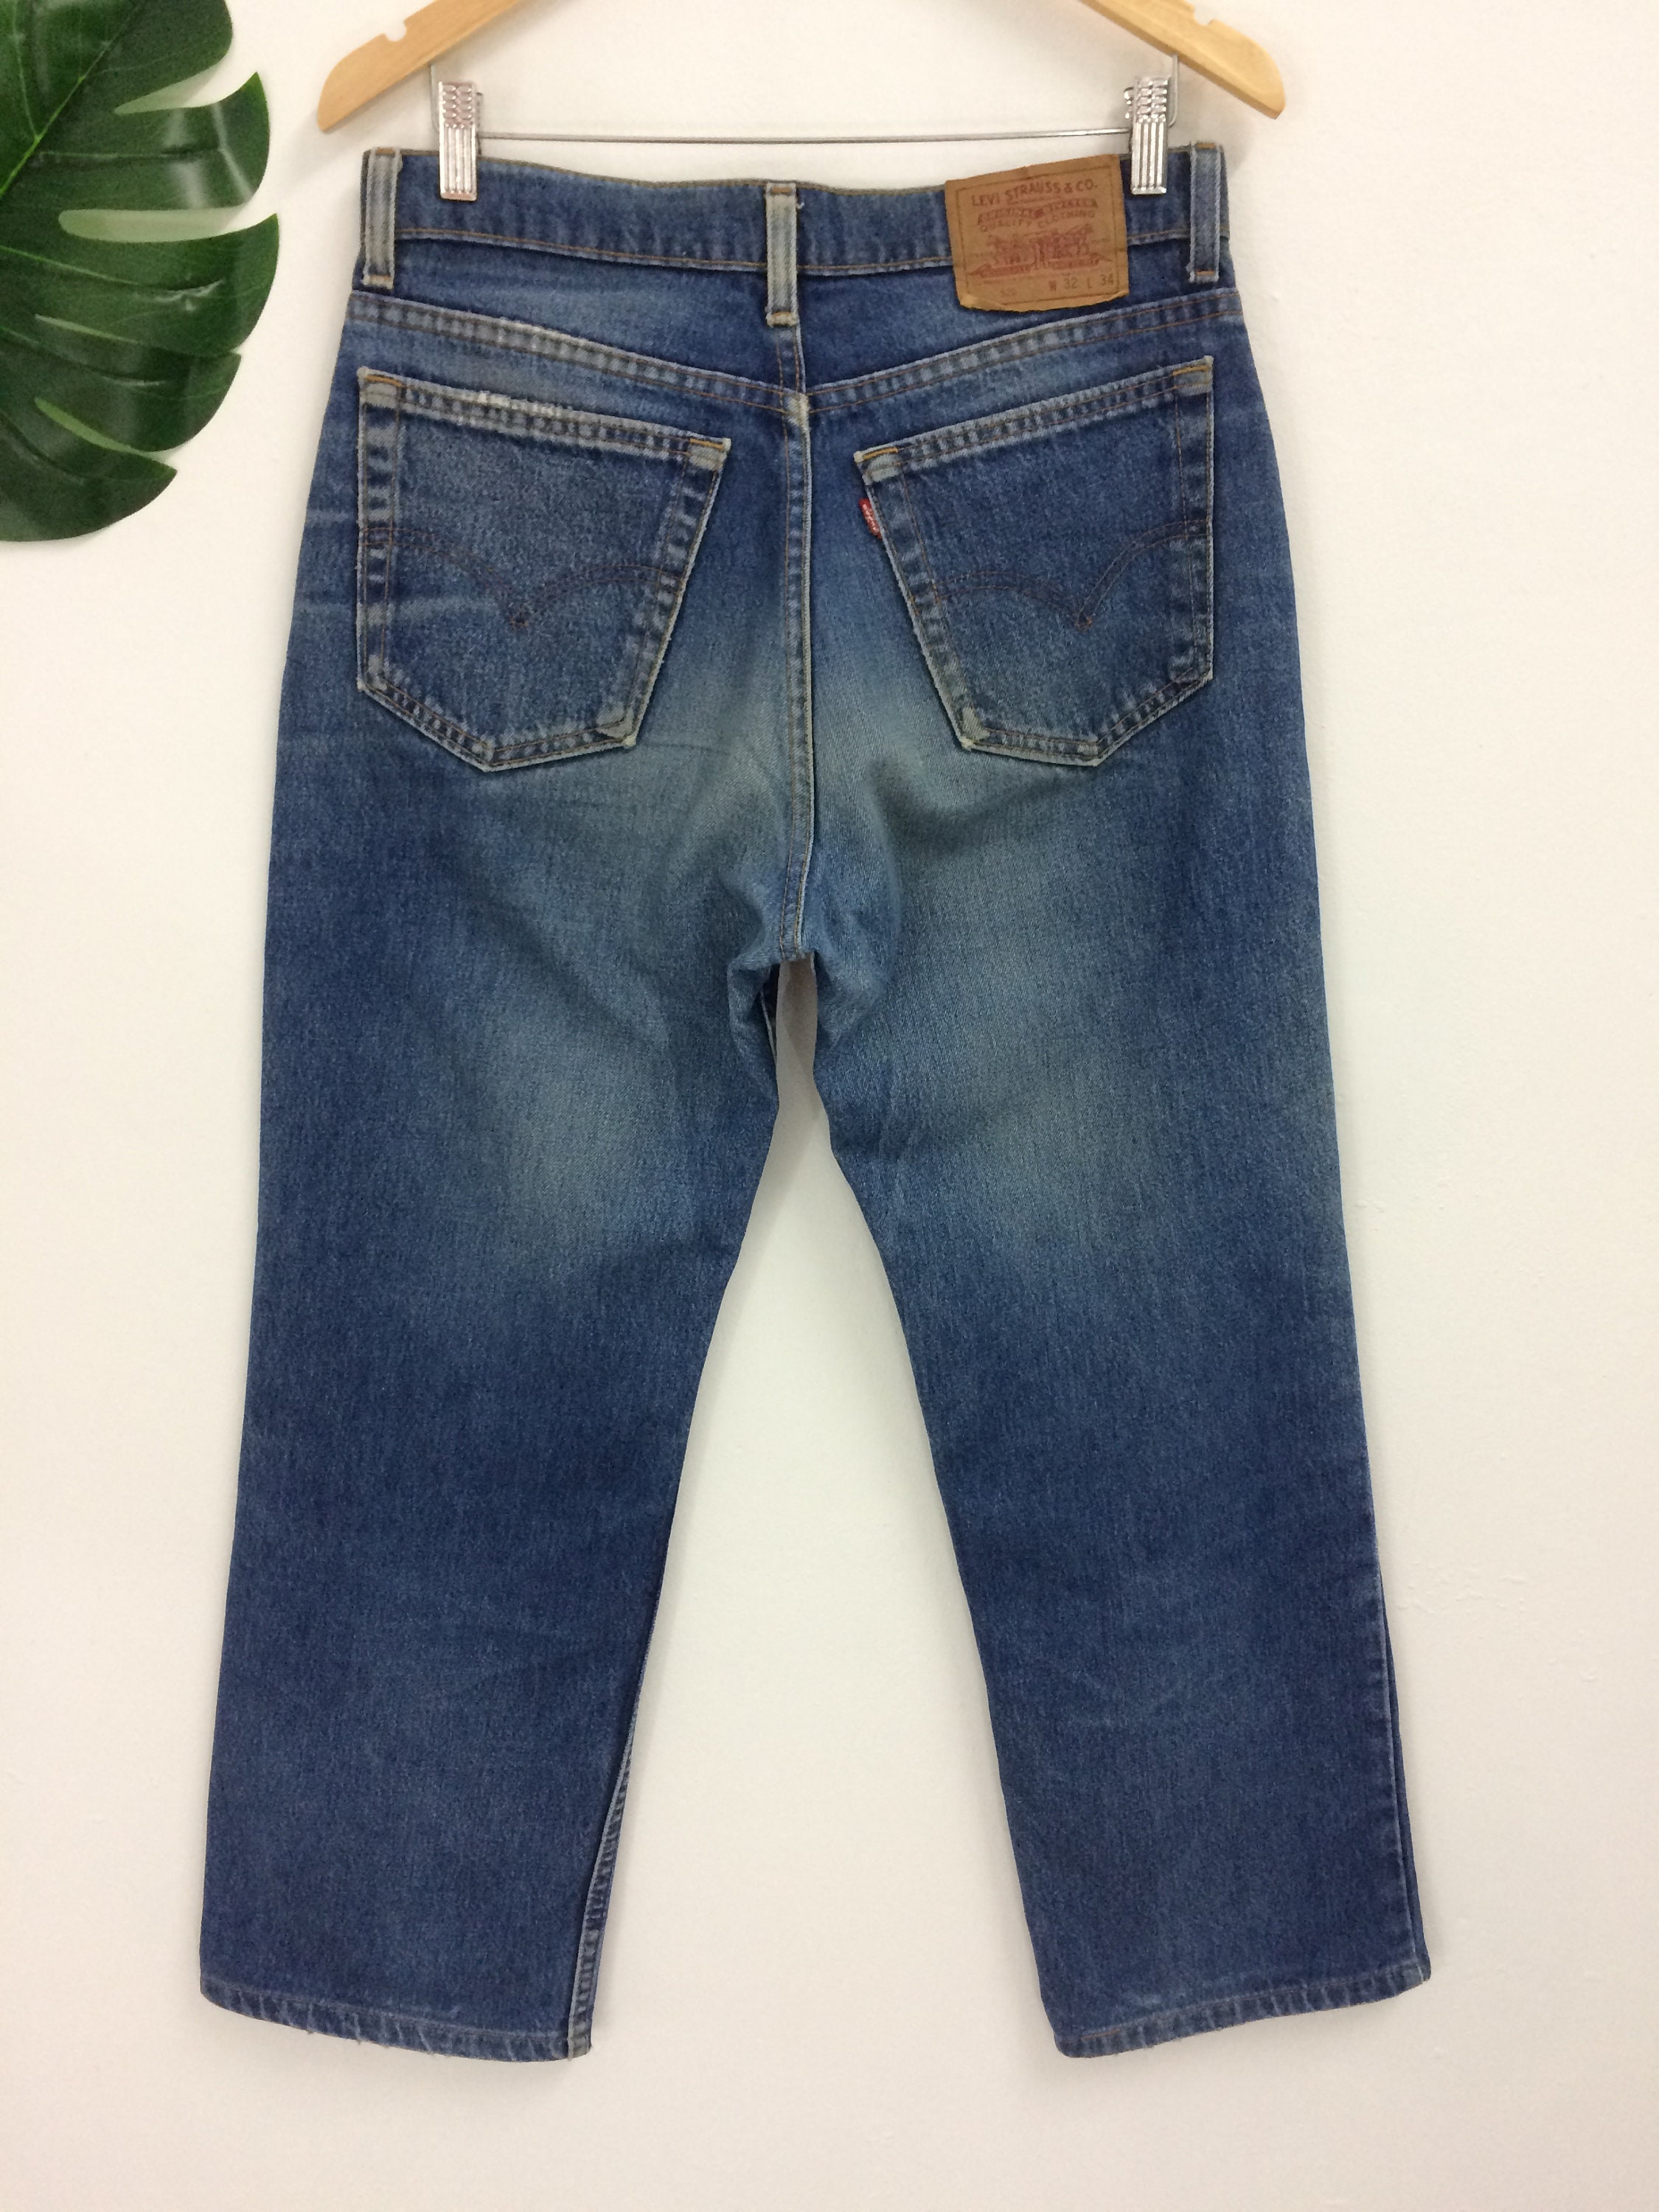 Size 32 Vintage Levis 520 Distressed Faded Medium Wash Jeans - Etsy Sweden